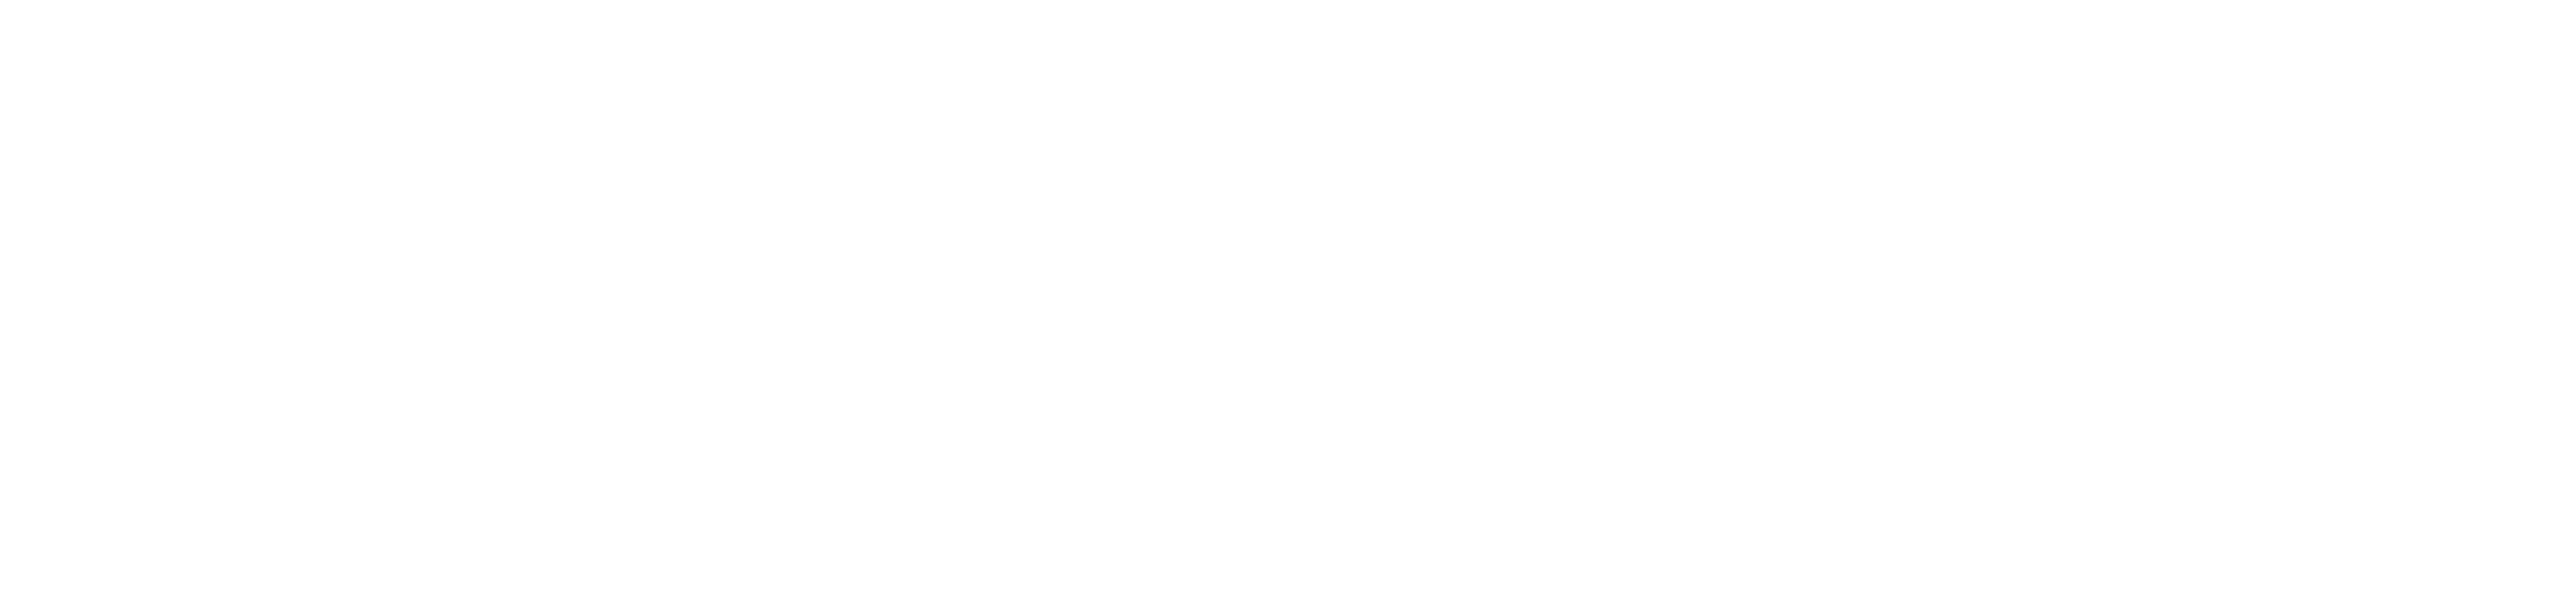 bingopromo.net